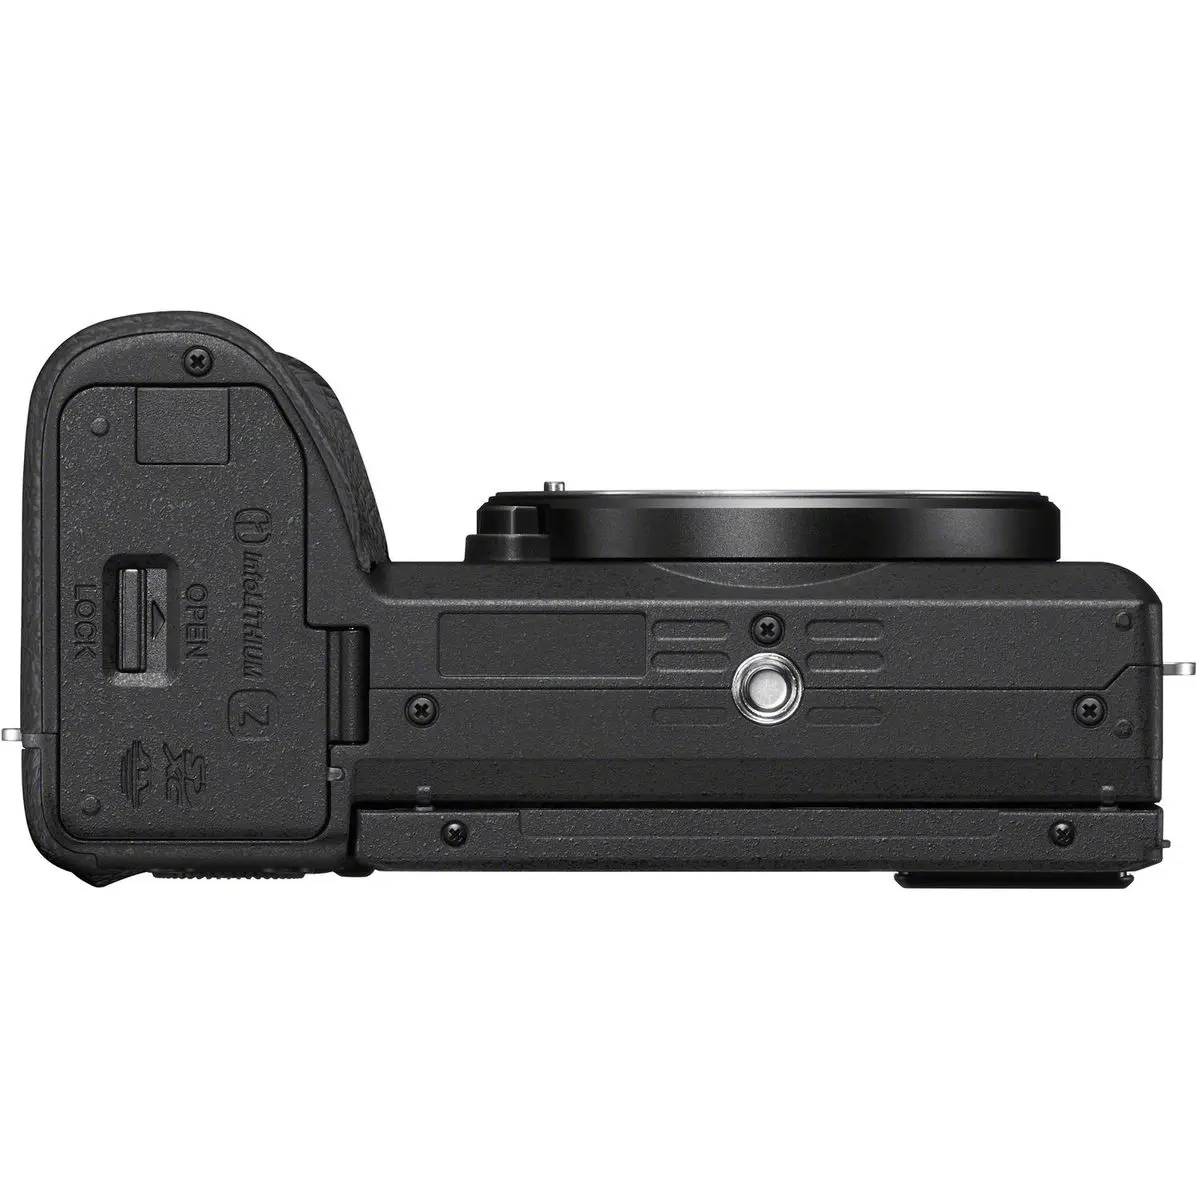 6. Sony A6600M Kit (18-135) Black Camera